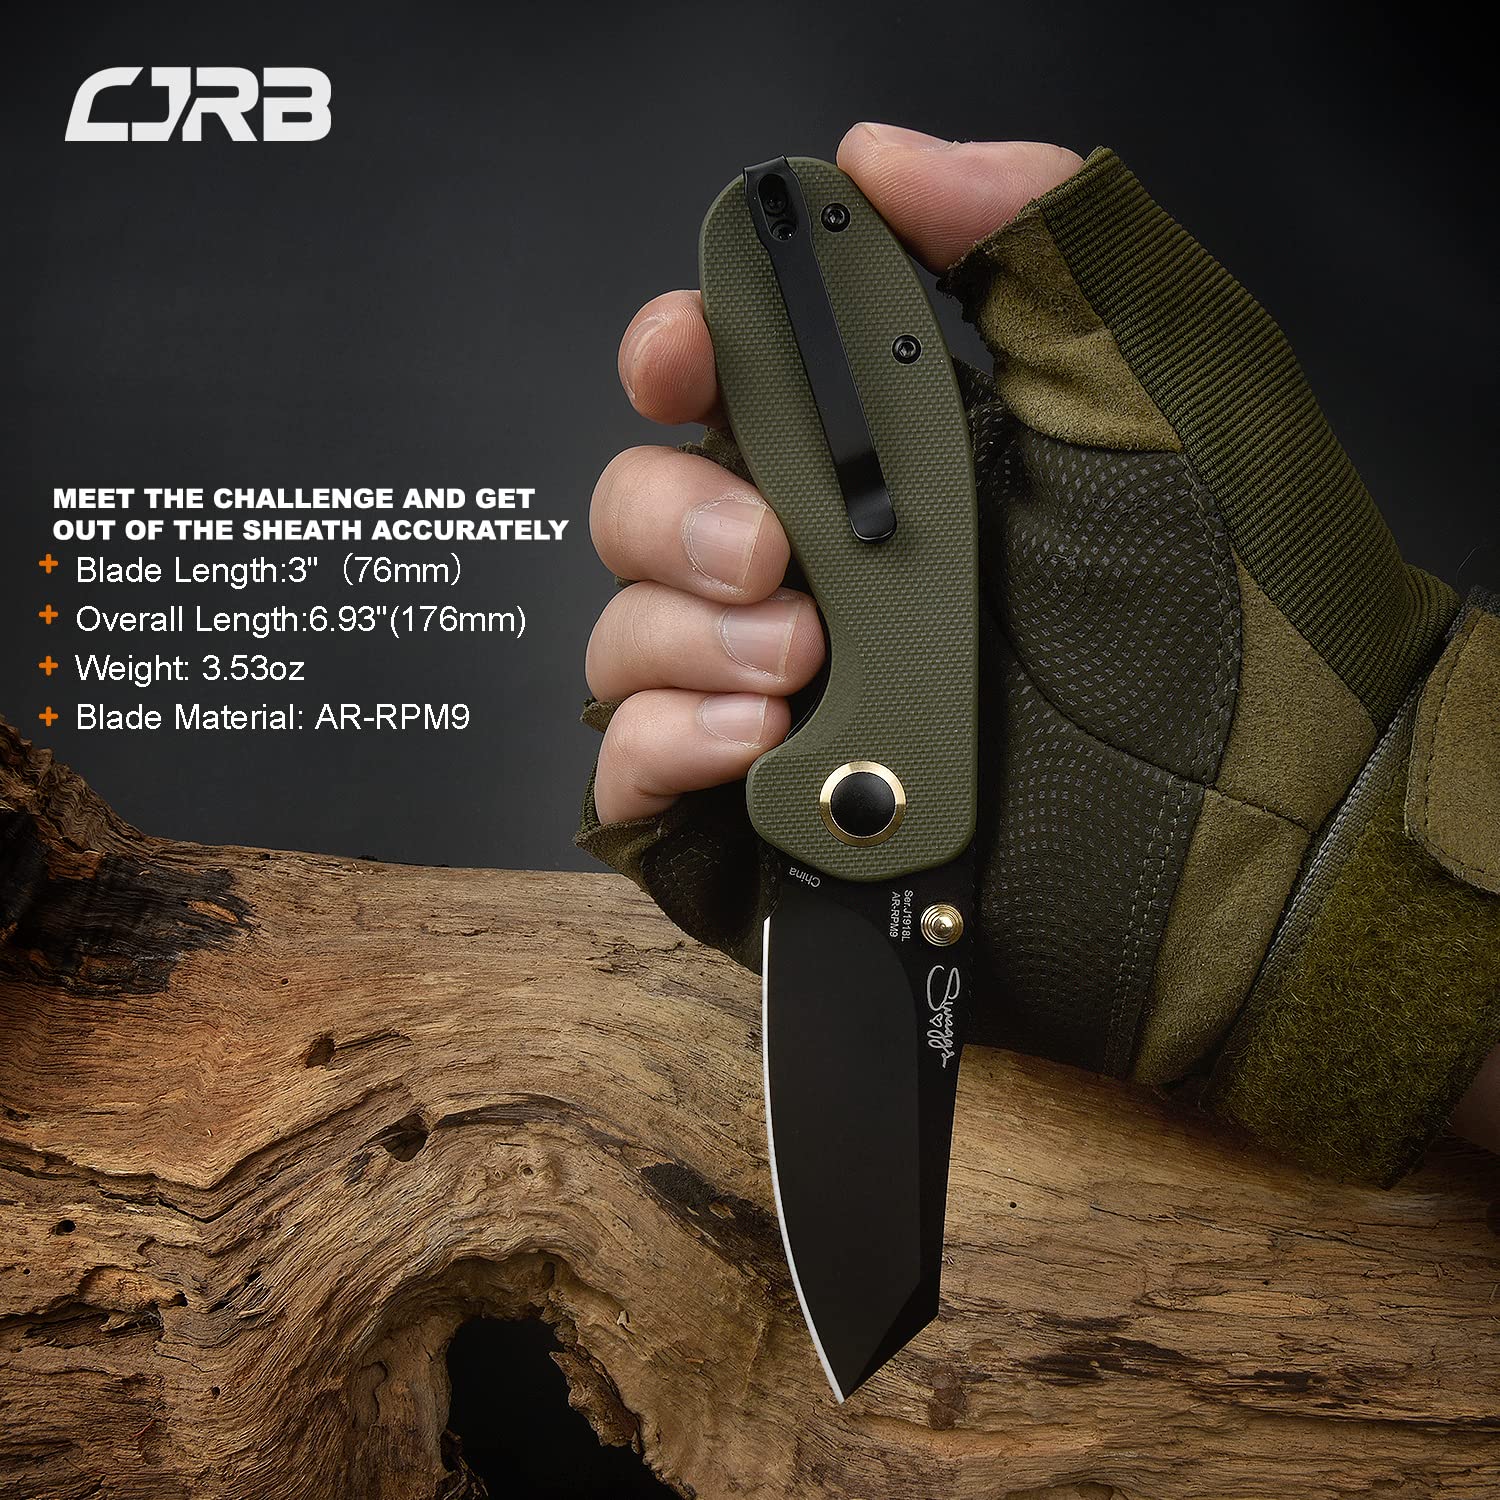 CJRB Pyrite Black Bundled with Maileah Green Great EDC Knife Companion